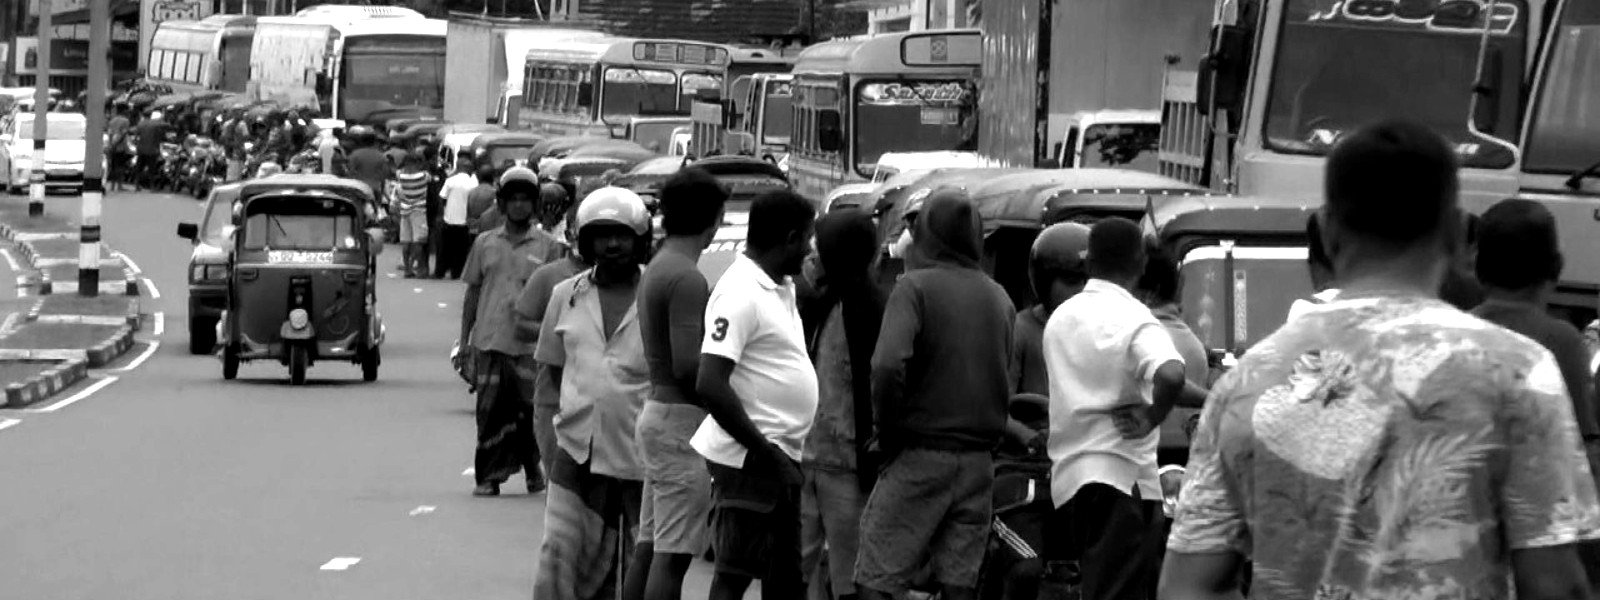 Sri Lanka: Family loses breadwinner as fuel crisis worsens